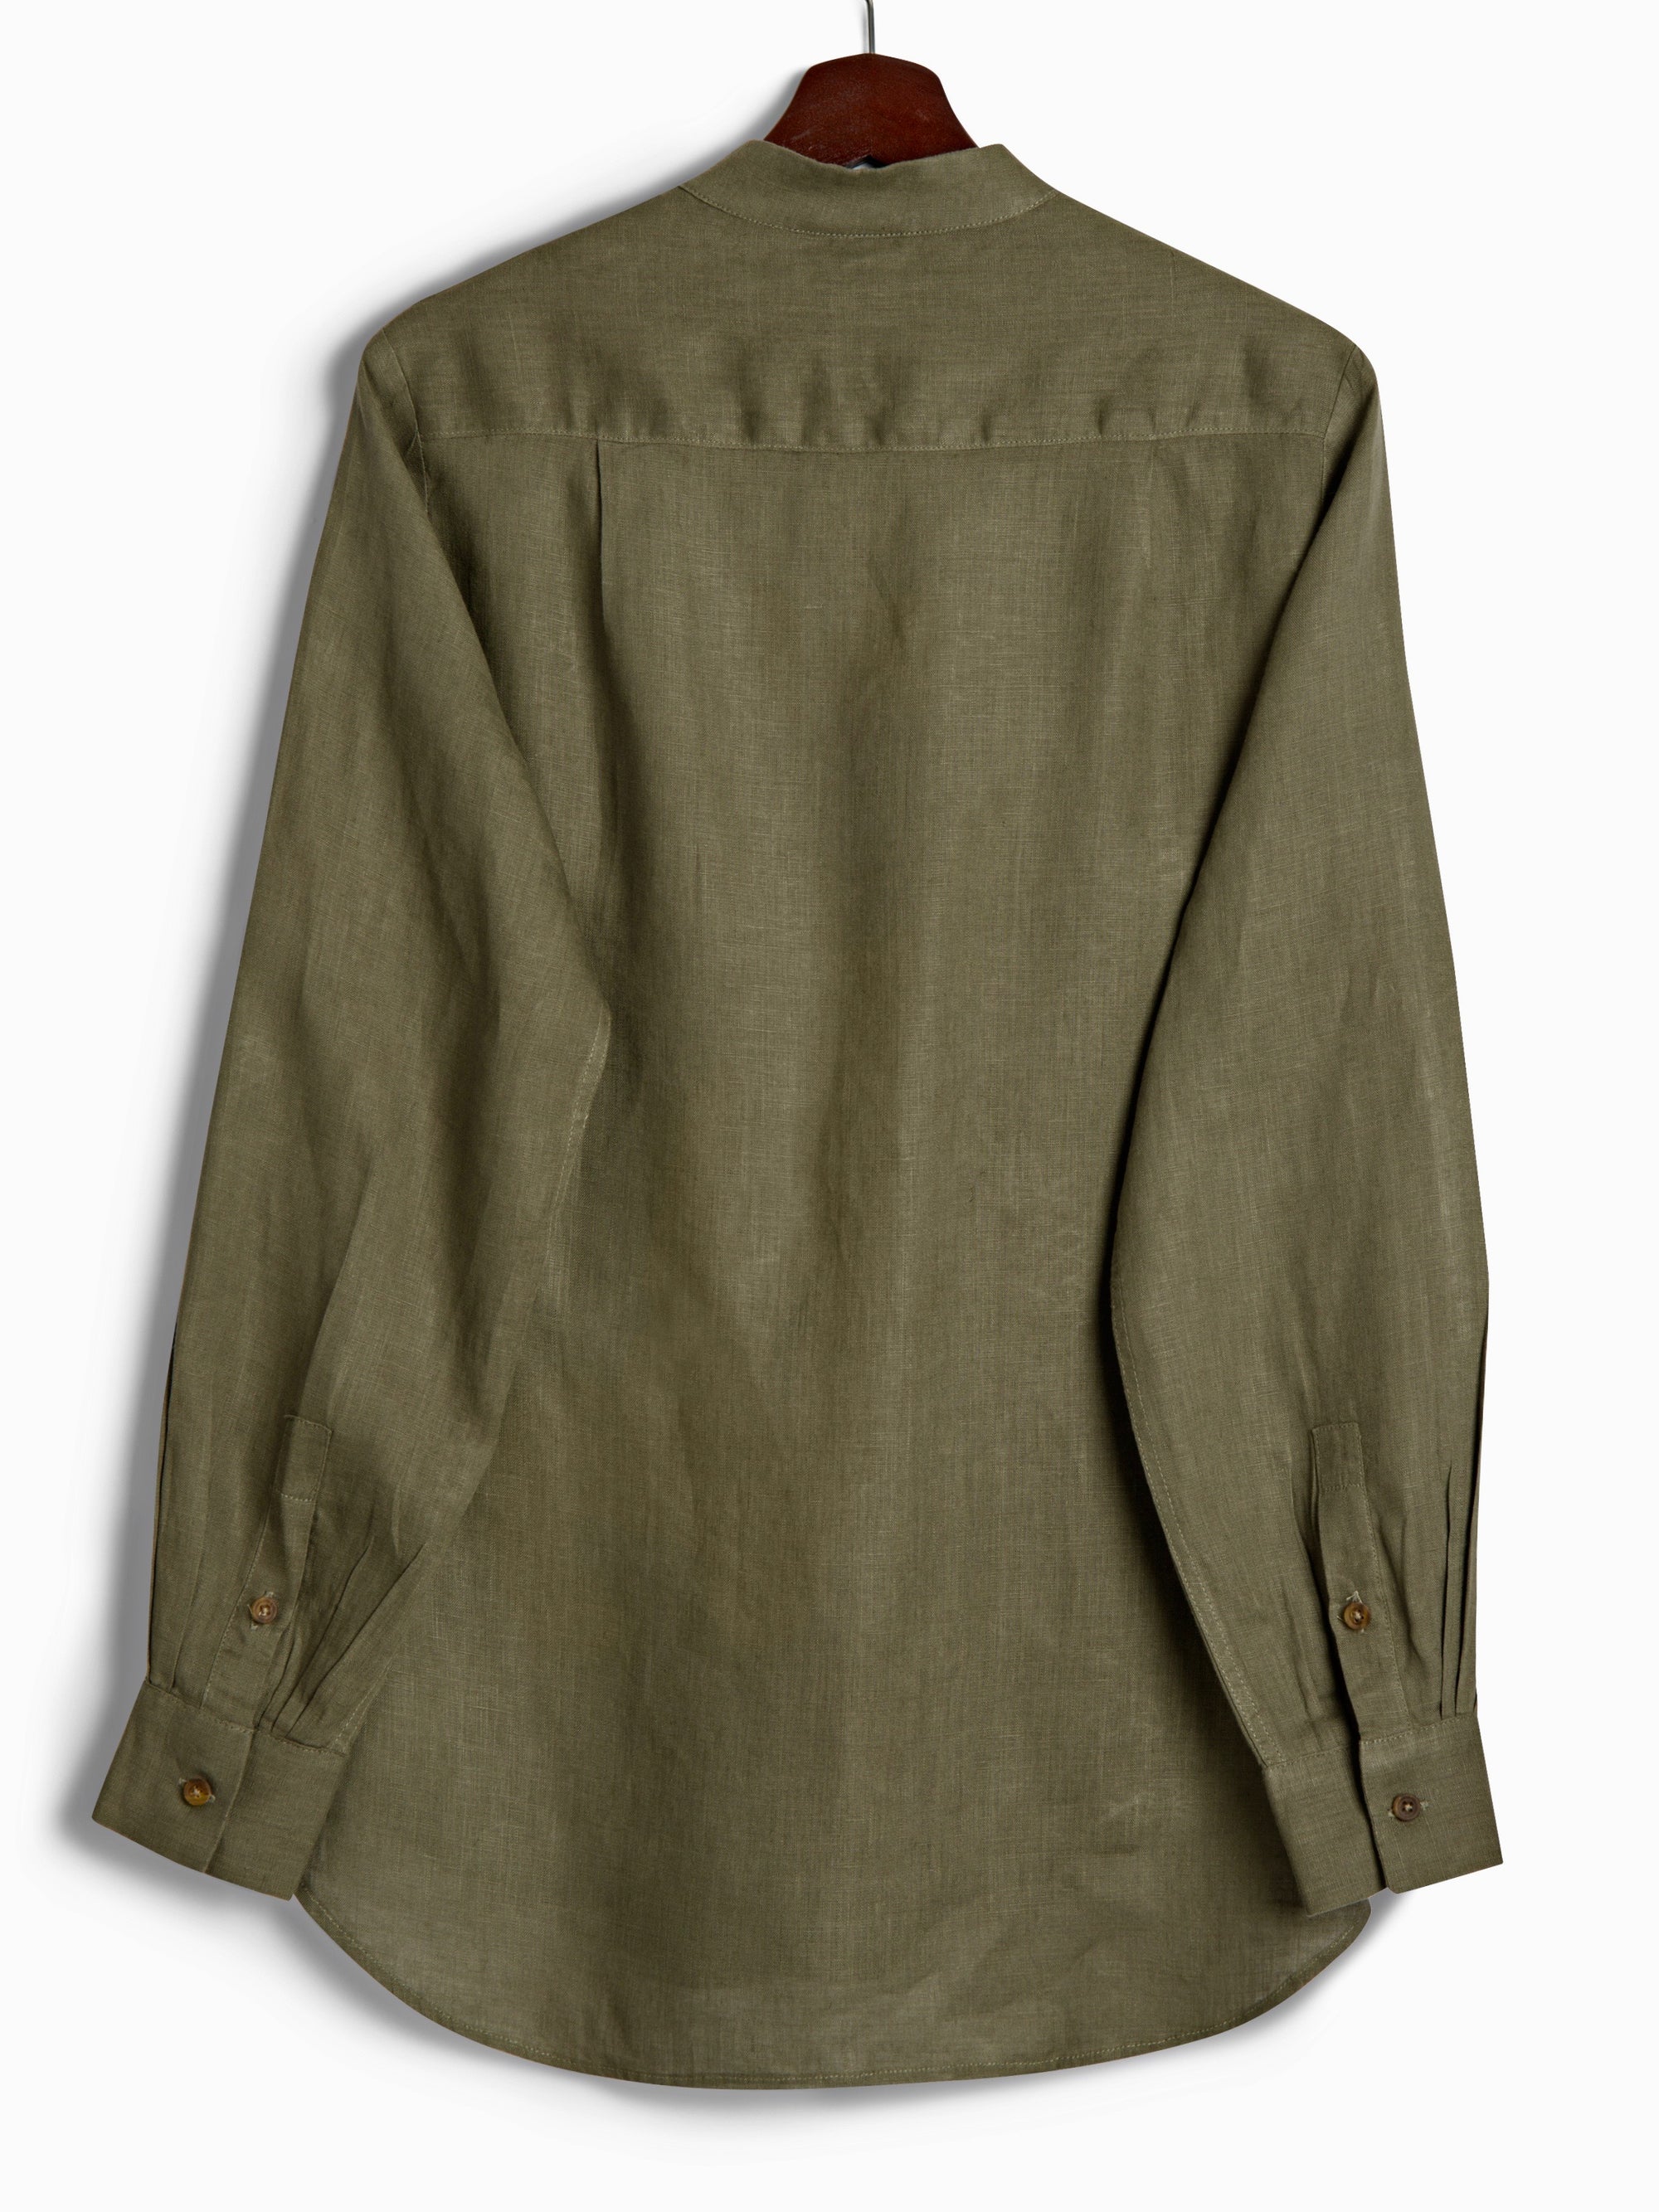 Bib Shirt in Olive Linen, Shirt, Hickman & Bousfied - Hickman & Bousfield, Safari and Travel Clothing